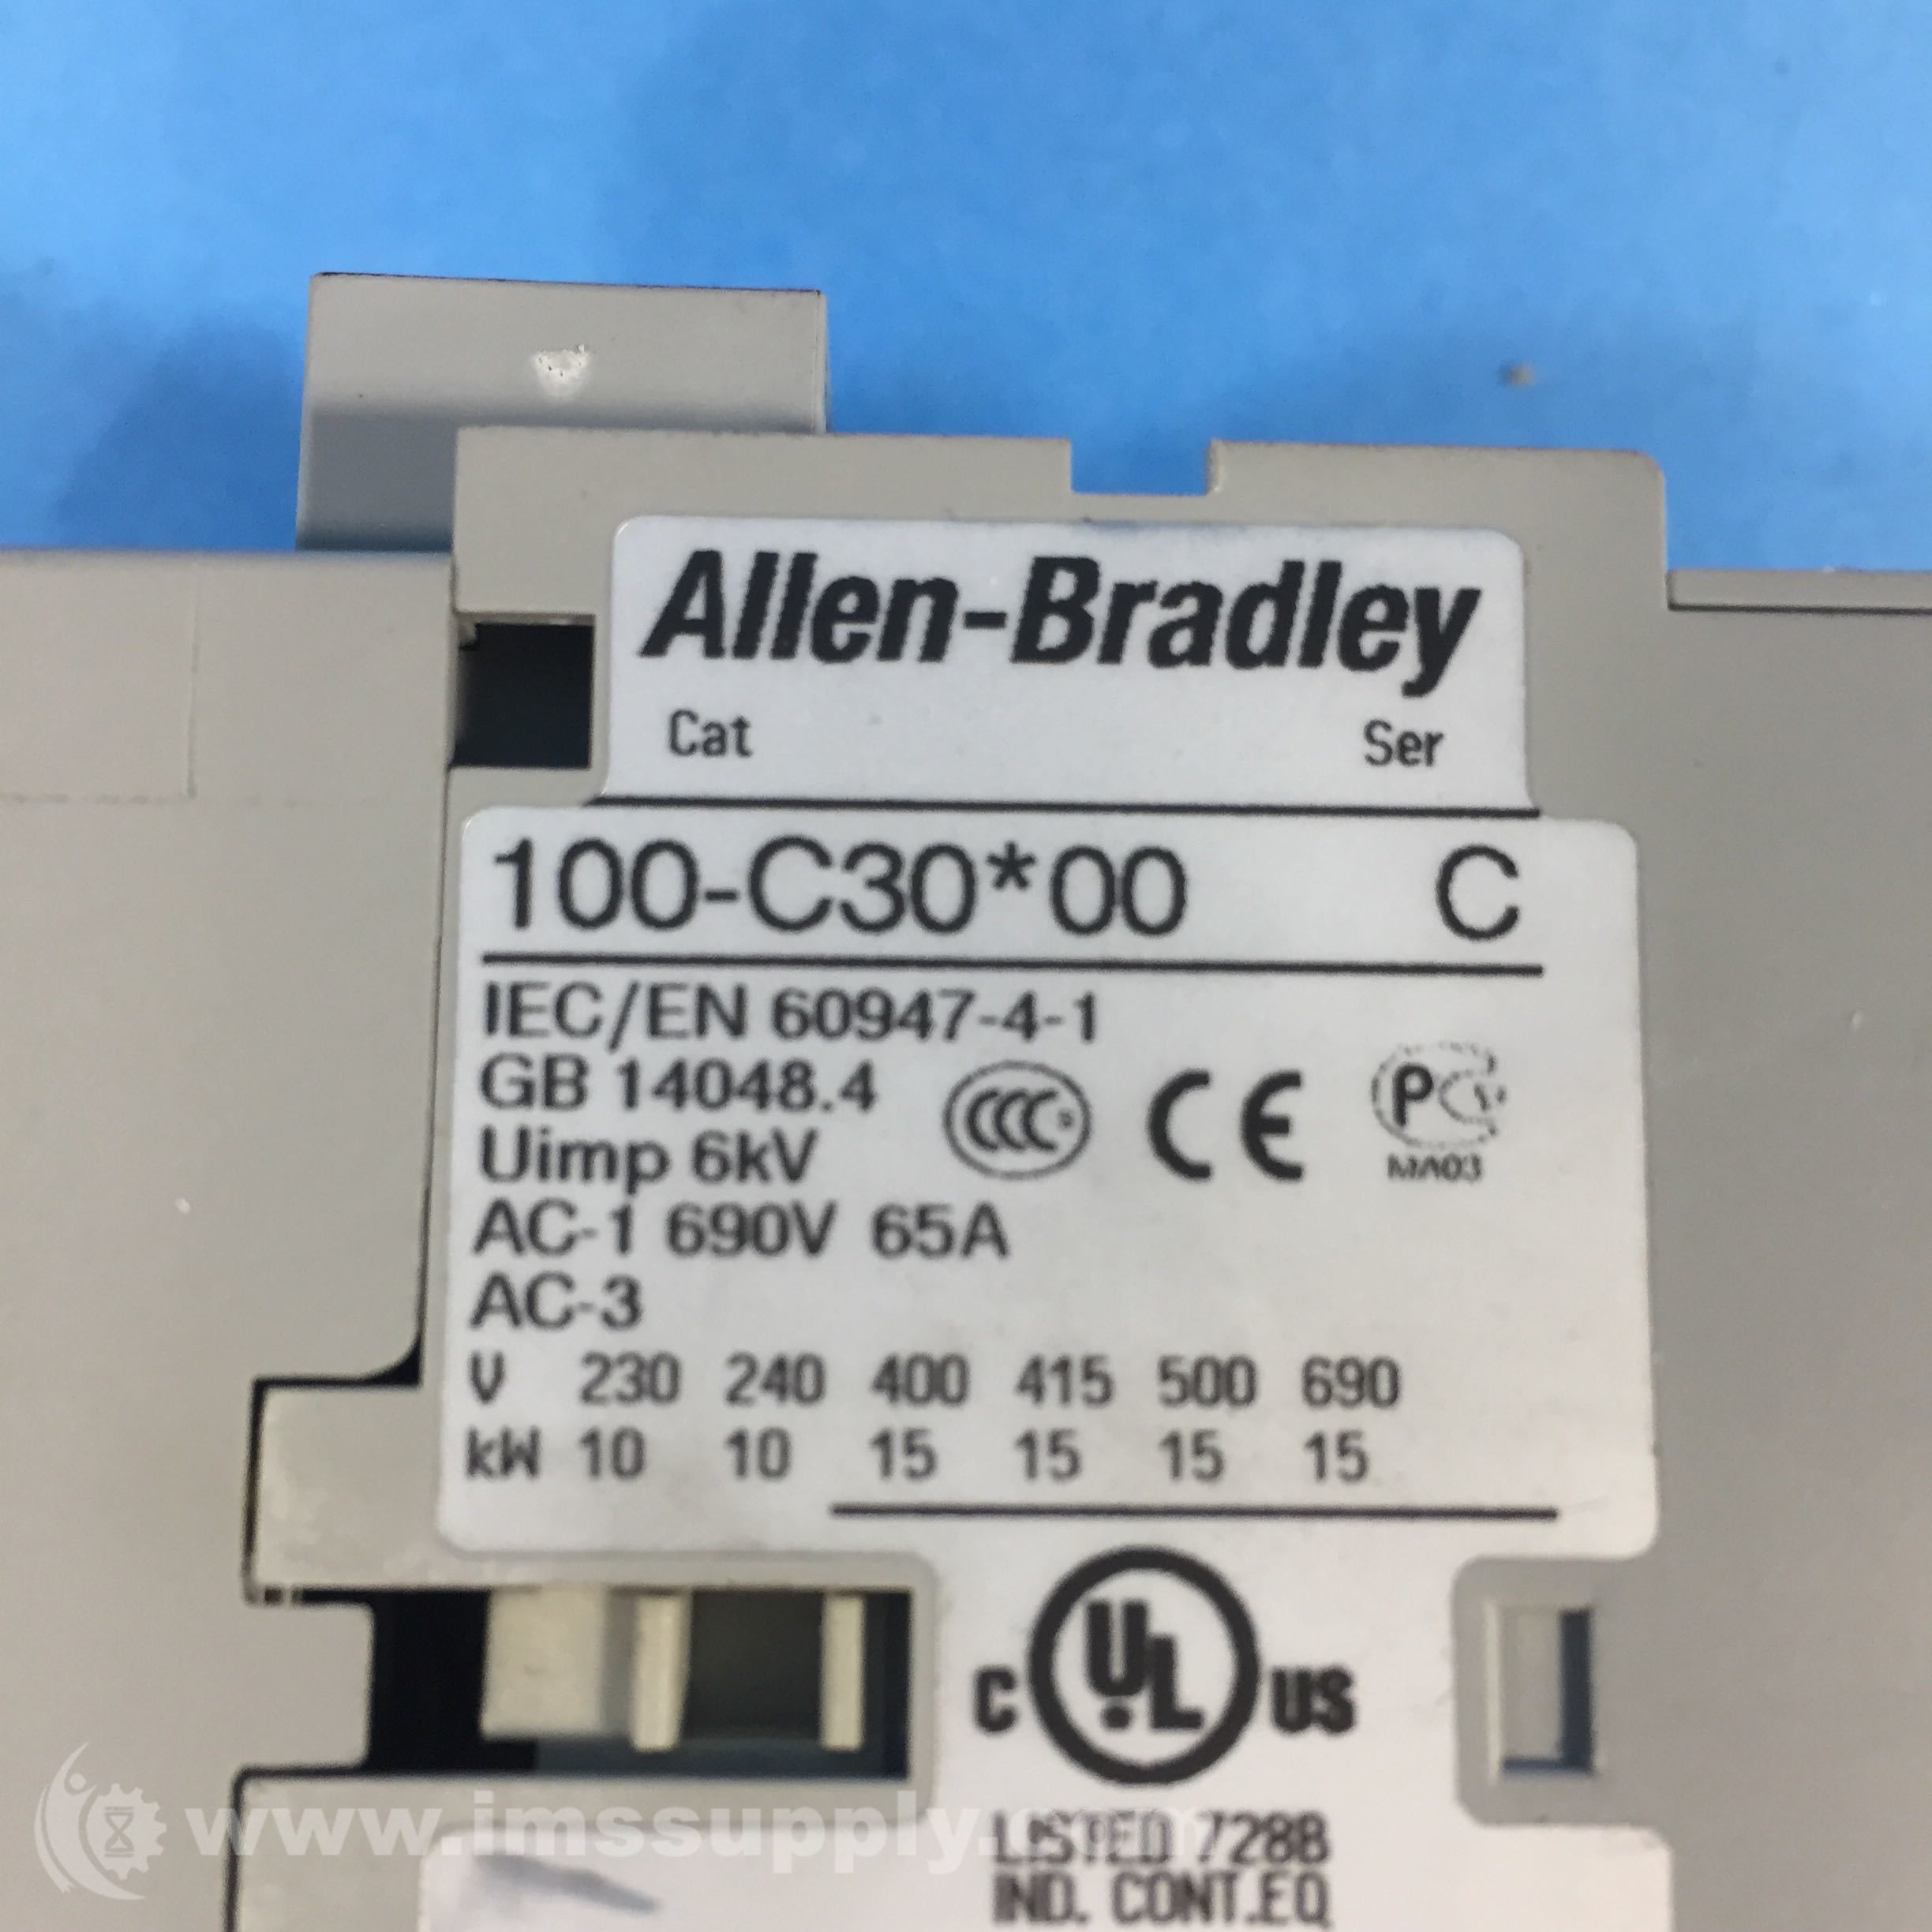 1) Allen Bradley 100-C30*00 Starter Contactor 230v coil - Conseil scolaire  francophone de Terre-Neuve et Labrador